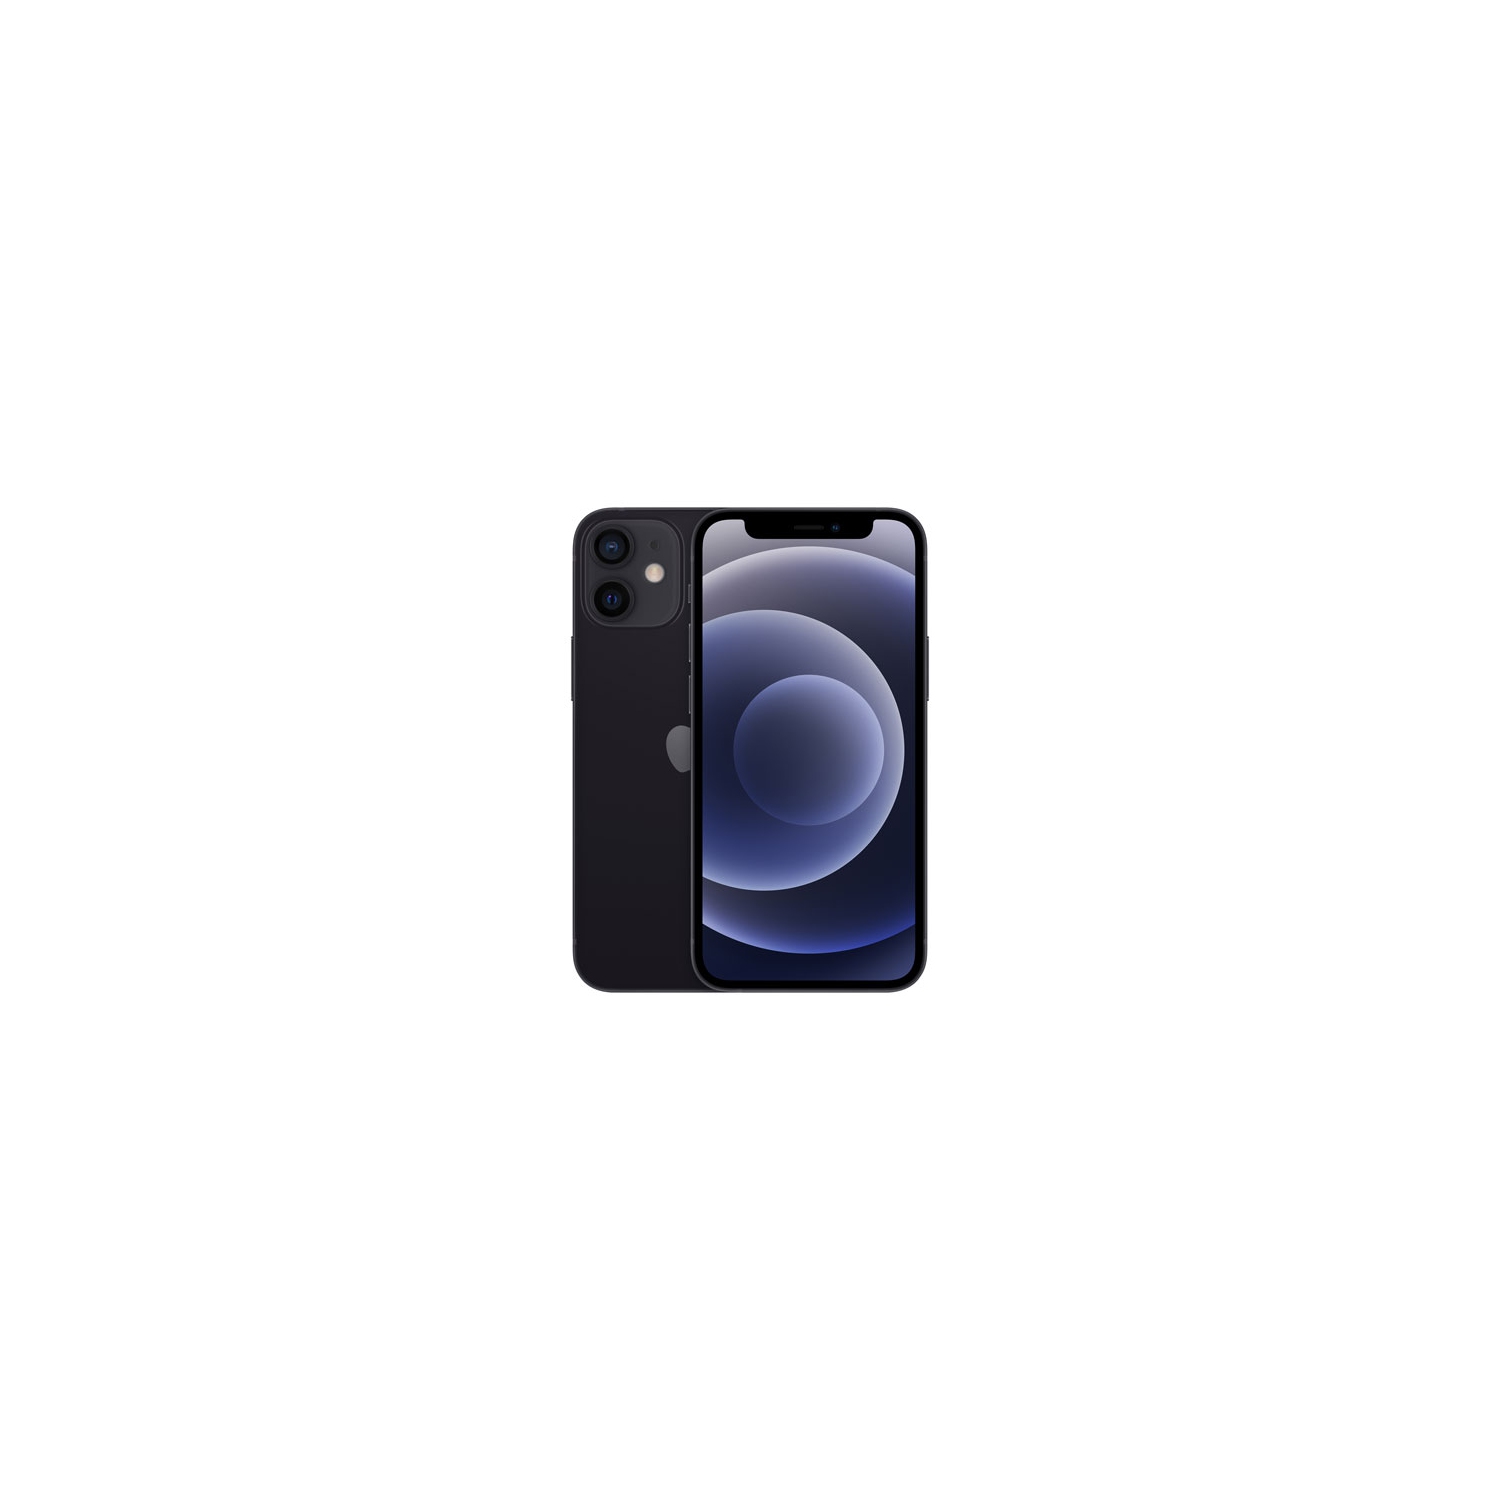 Refurbished (Excellent) - Apple iPhone 12 mini 64GB Smartphone - Black - Unlocked - Certified Refurbished